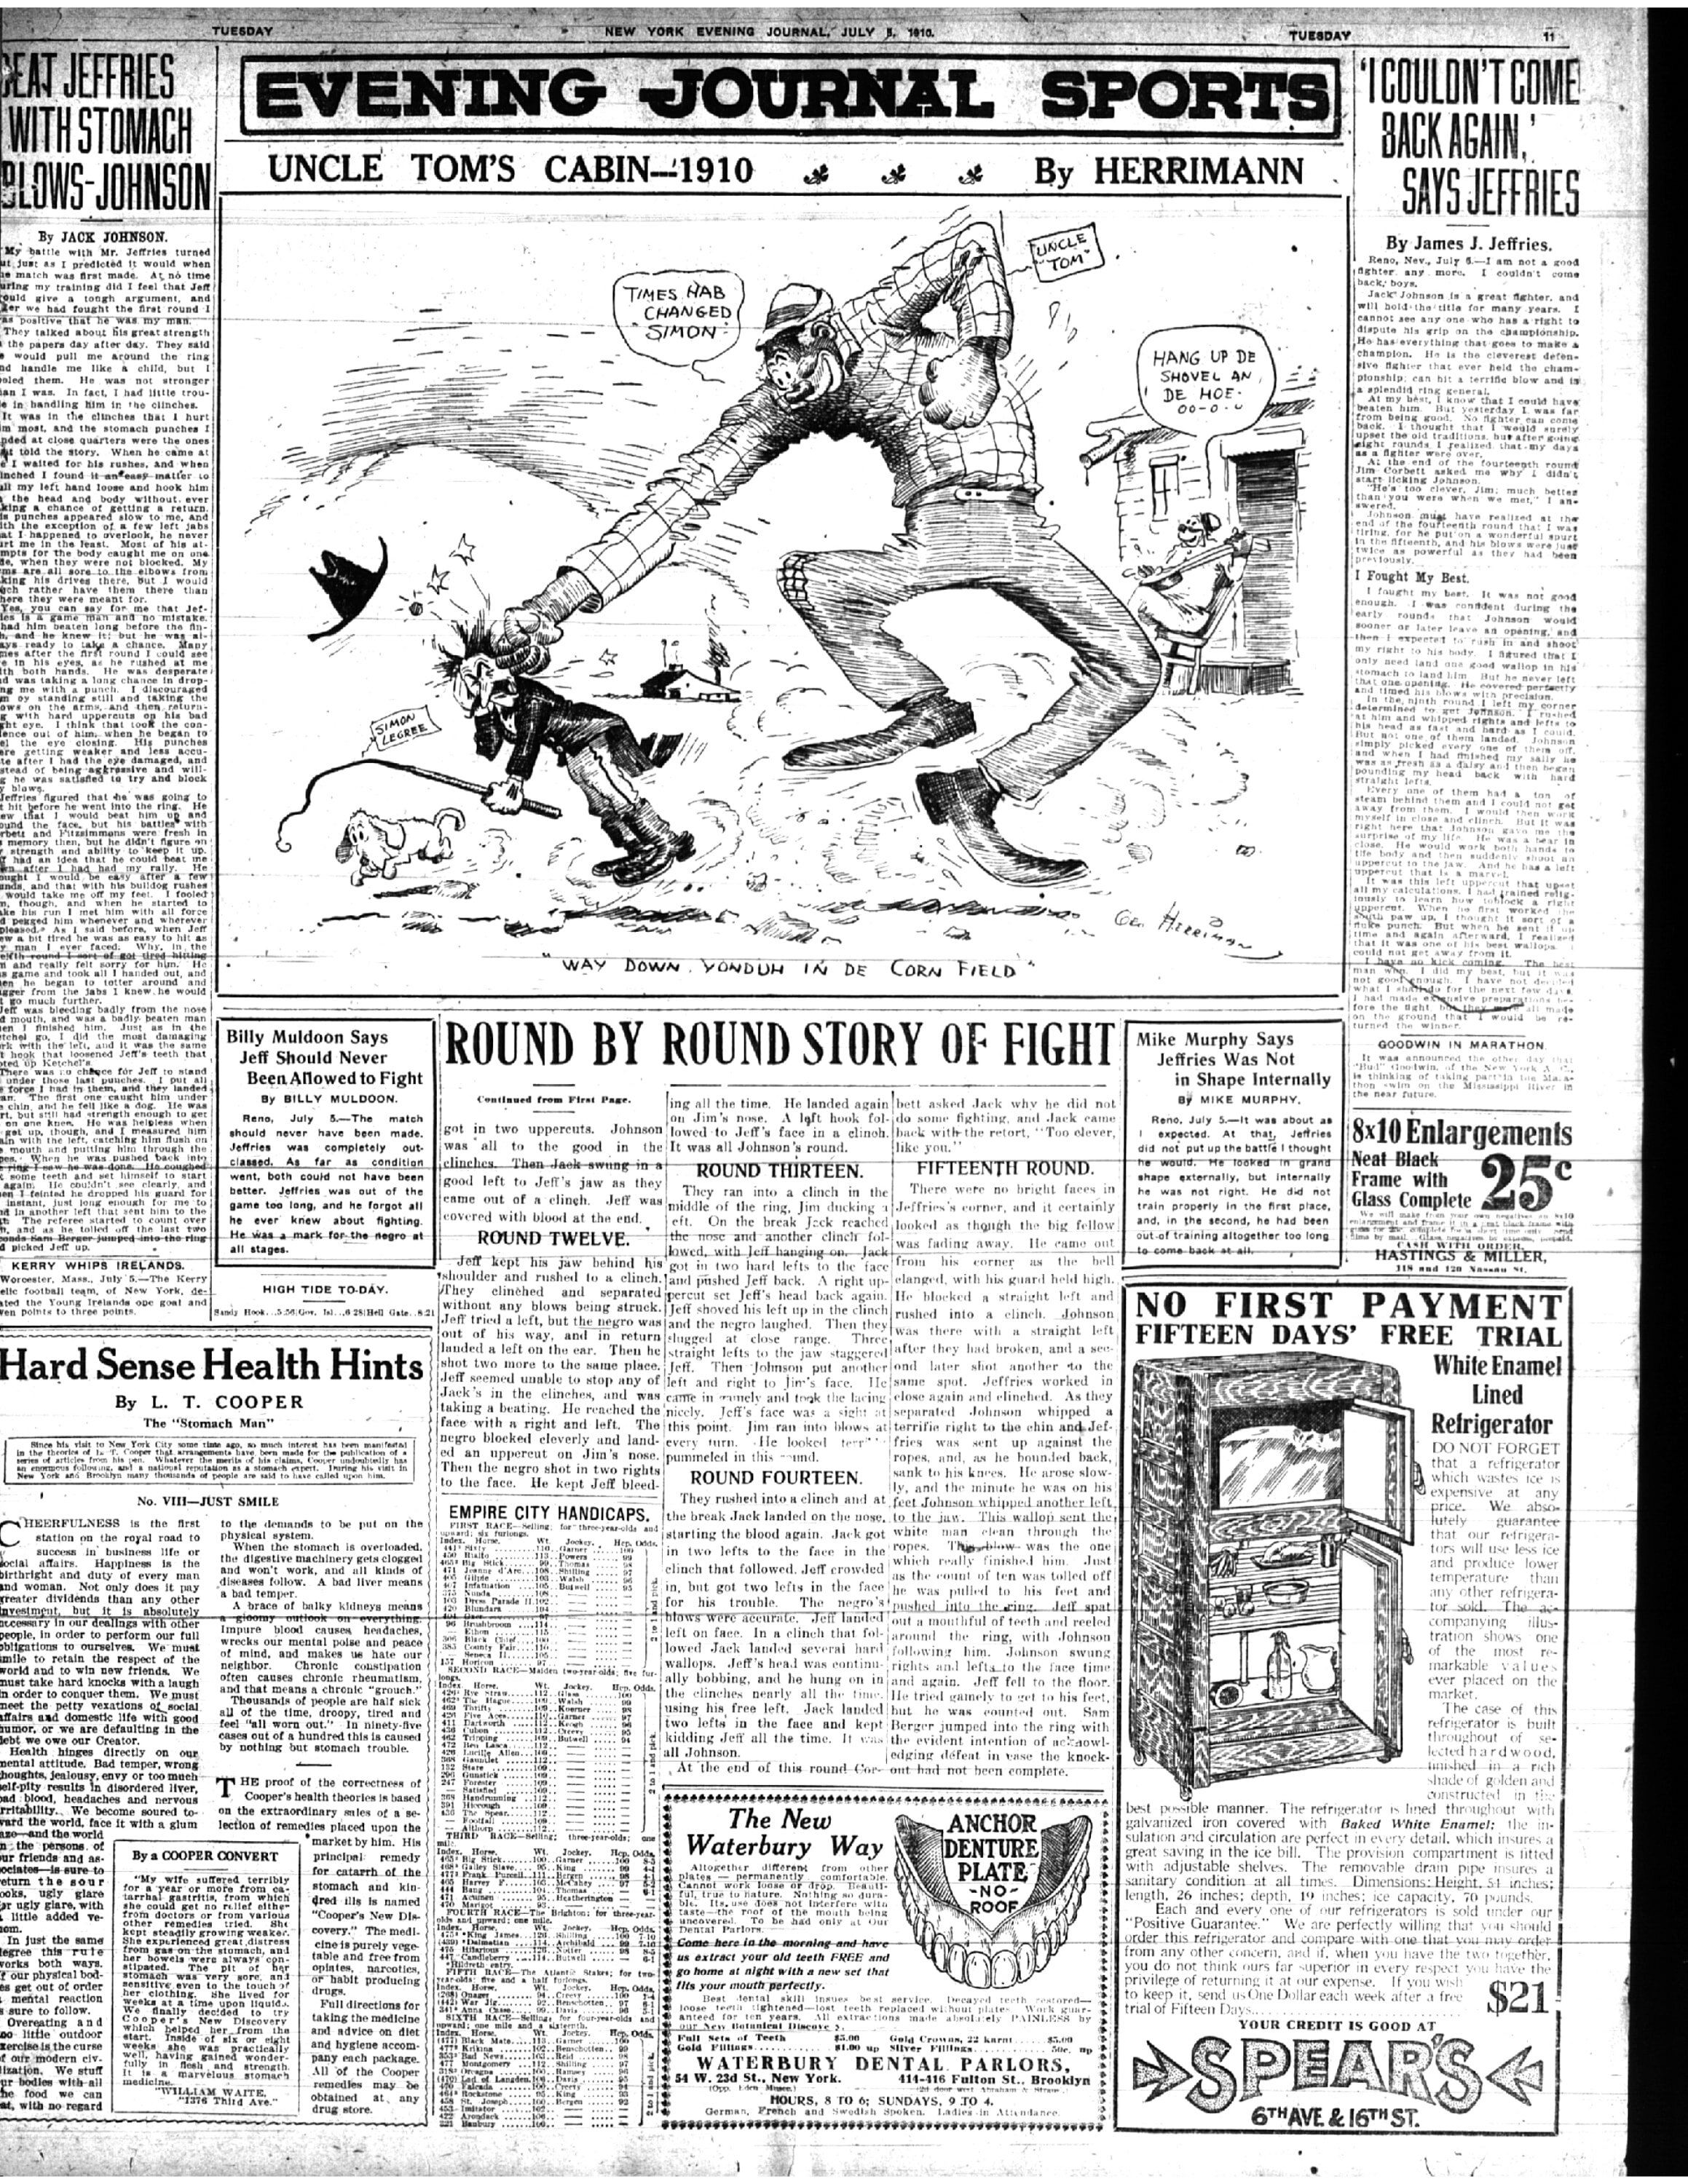 11-nyej-07-5-1910-herriman's-cartoon-after-johnson-victory-.jpg